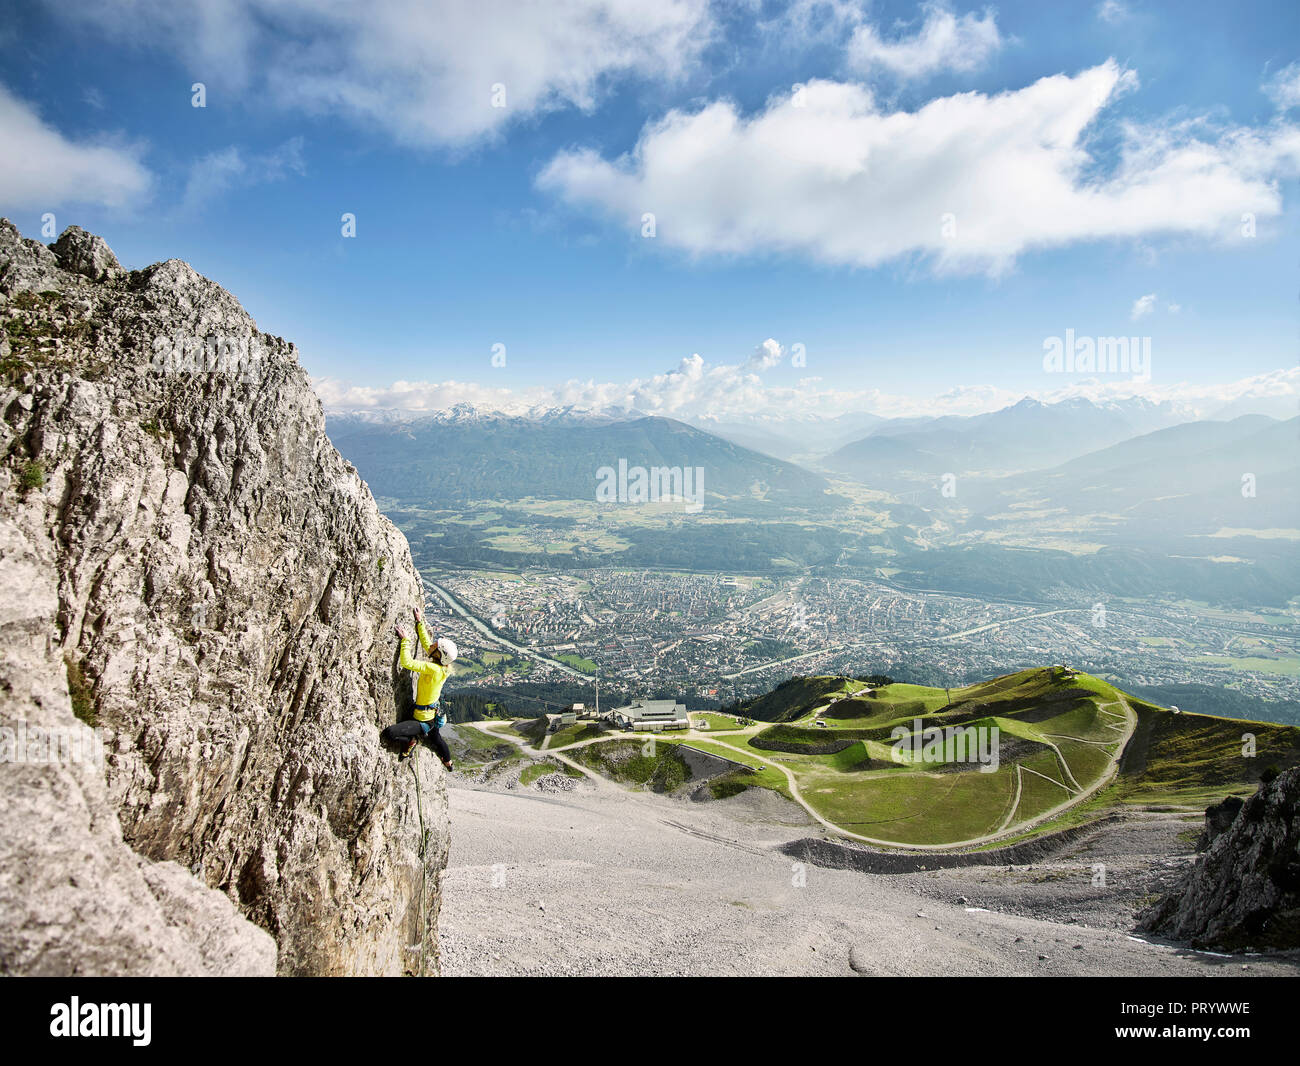 Austria, Innsbruck, Nordkette, man climbing in rock wall Stock Photo